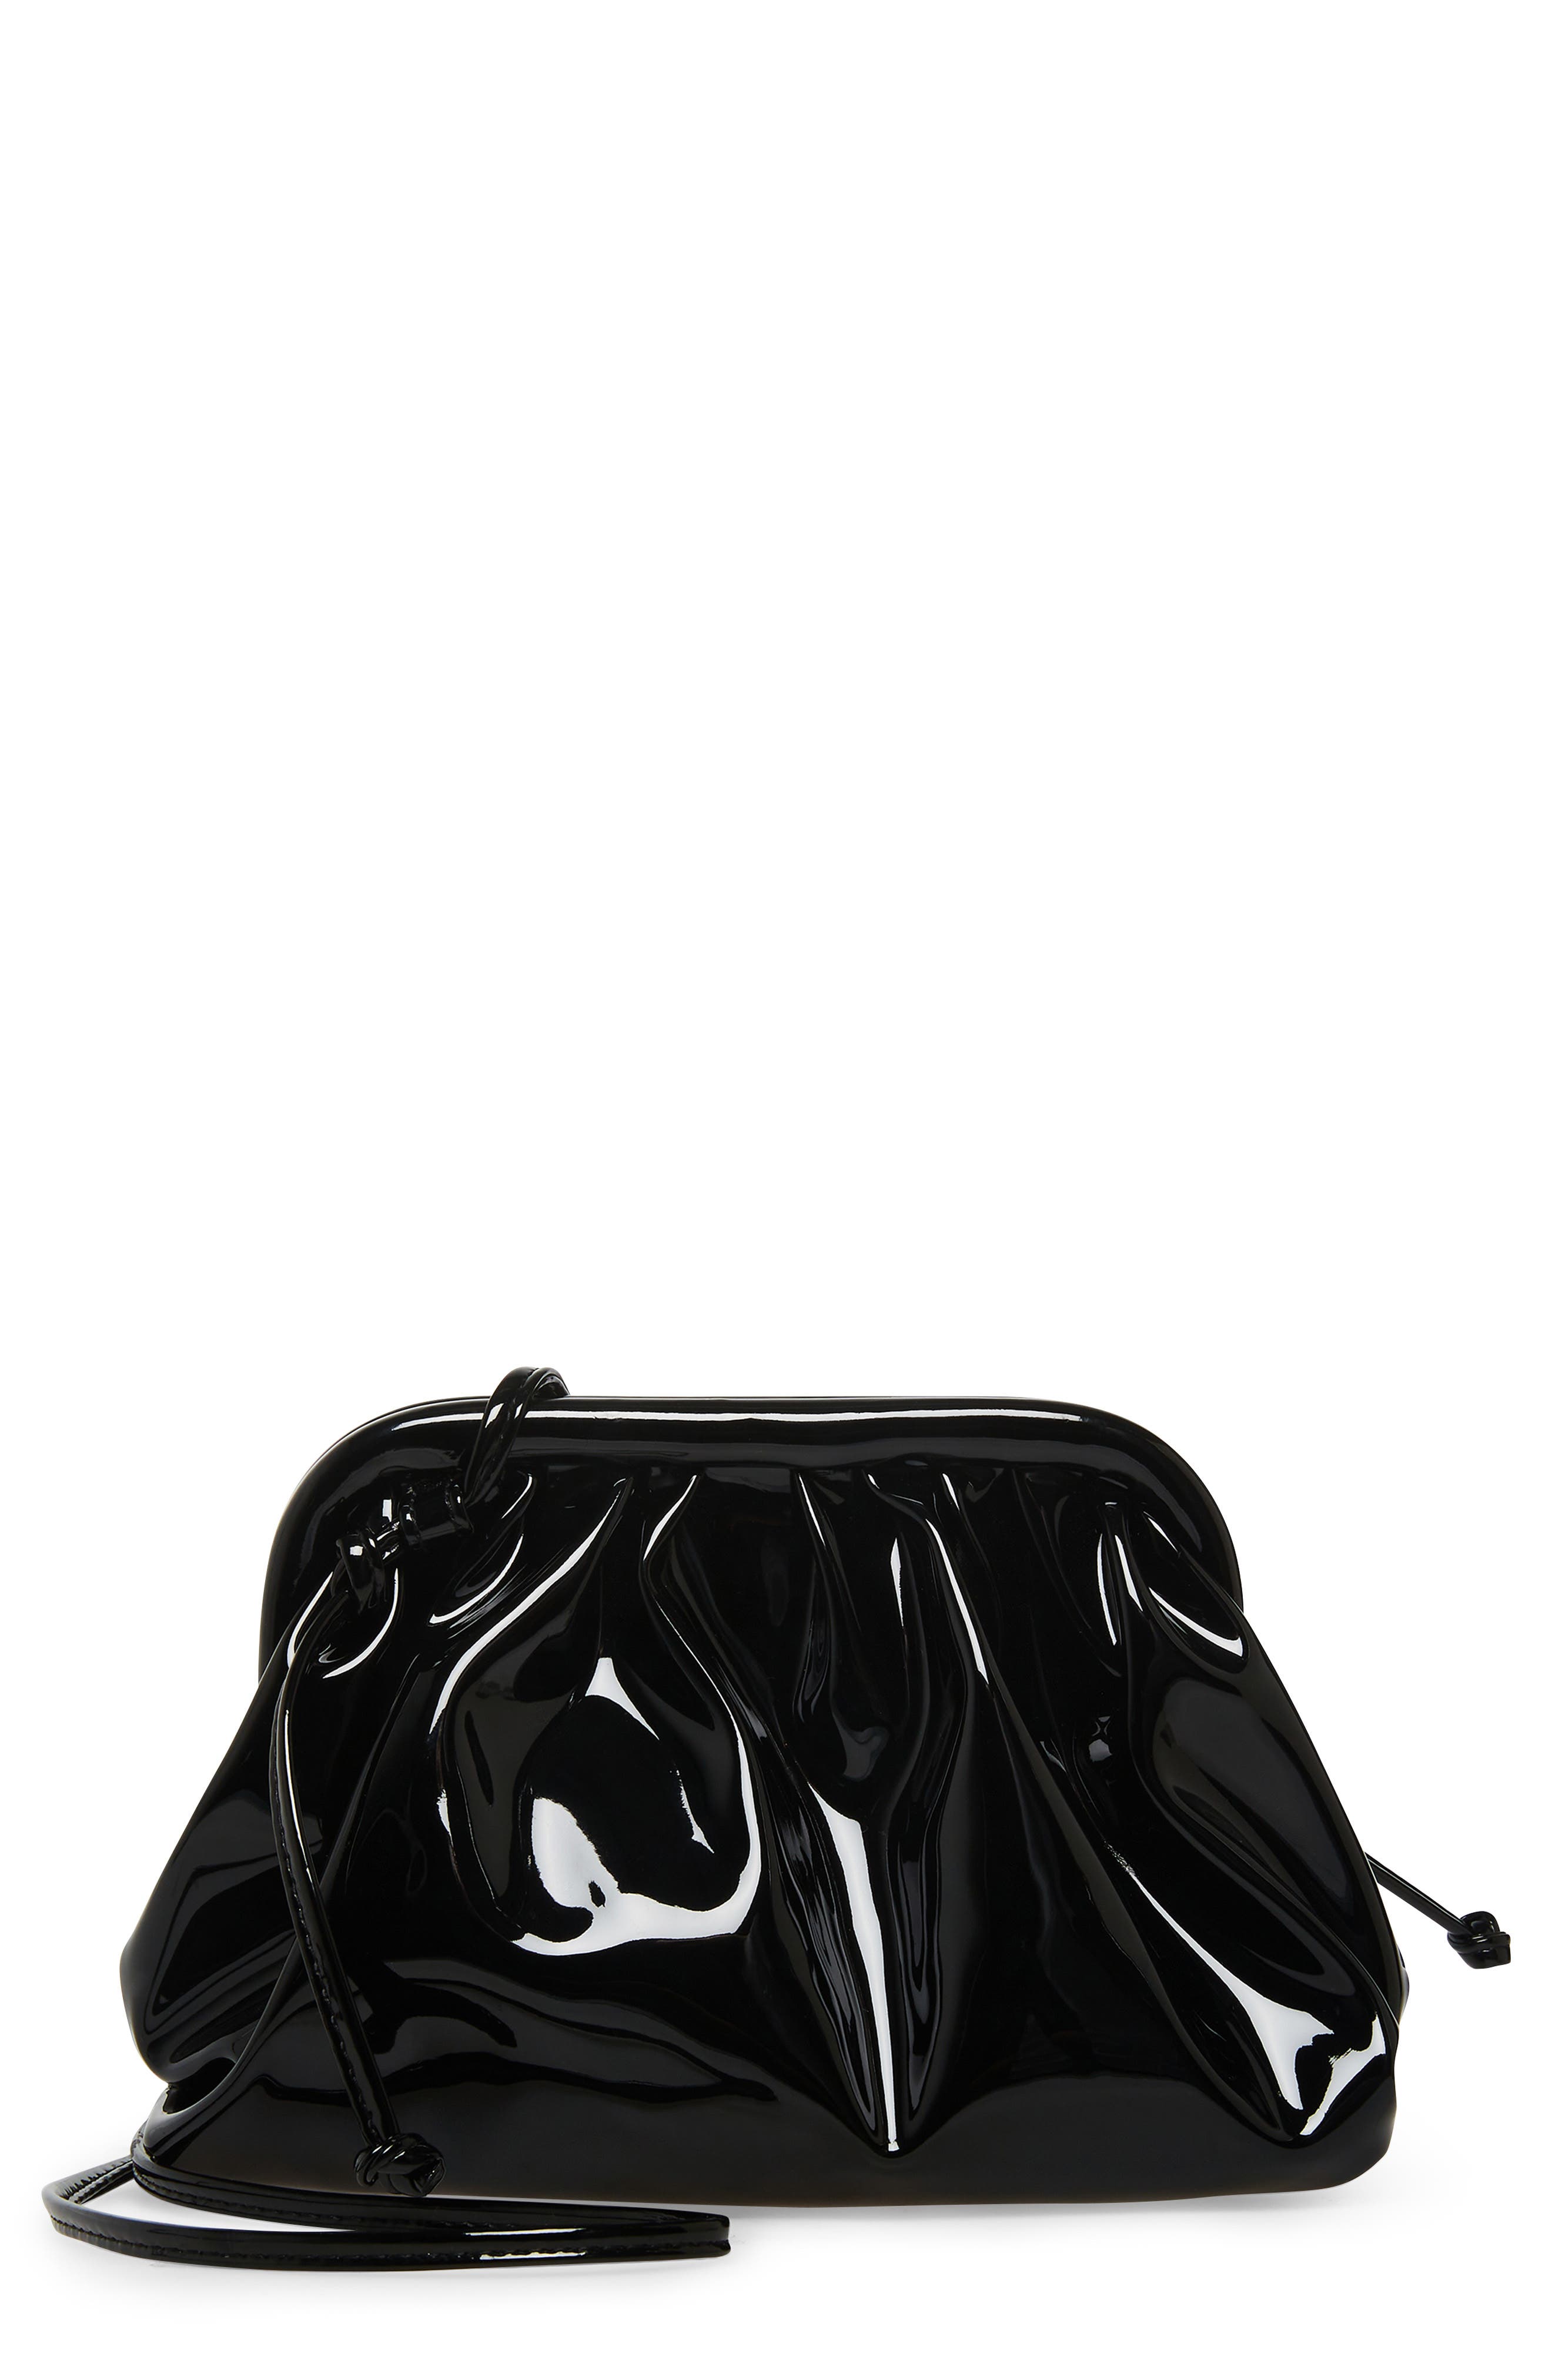 Women's Black Acrylic Box Clutch Bag with Lip Print. 